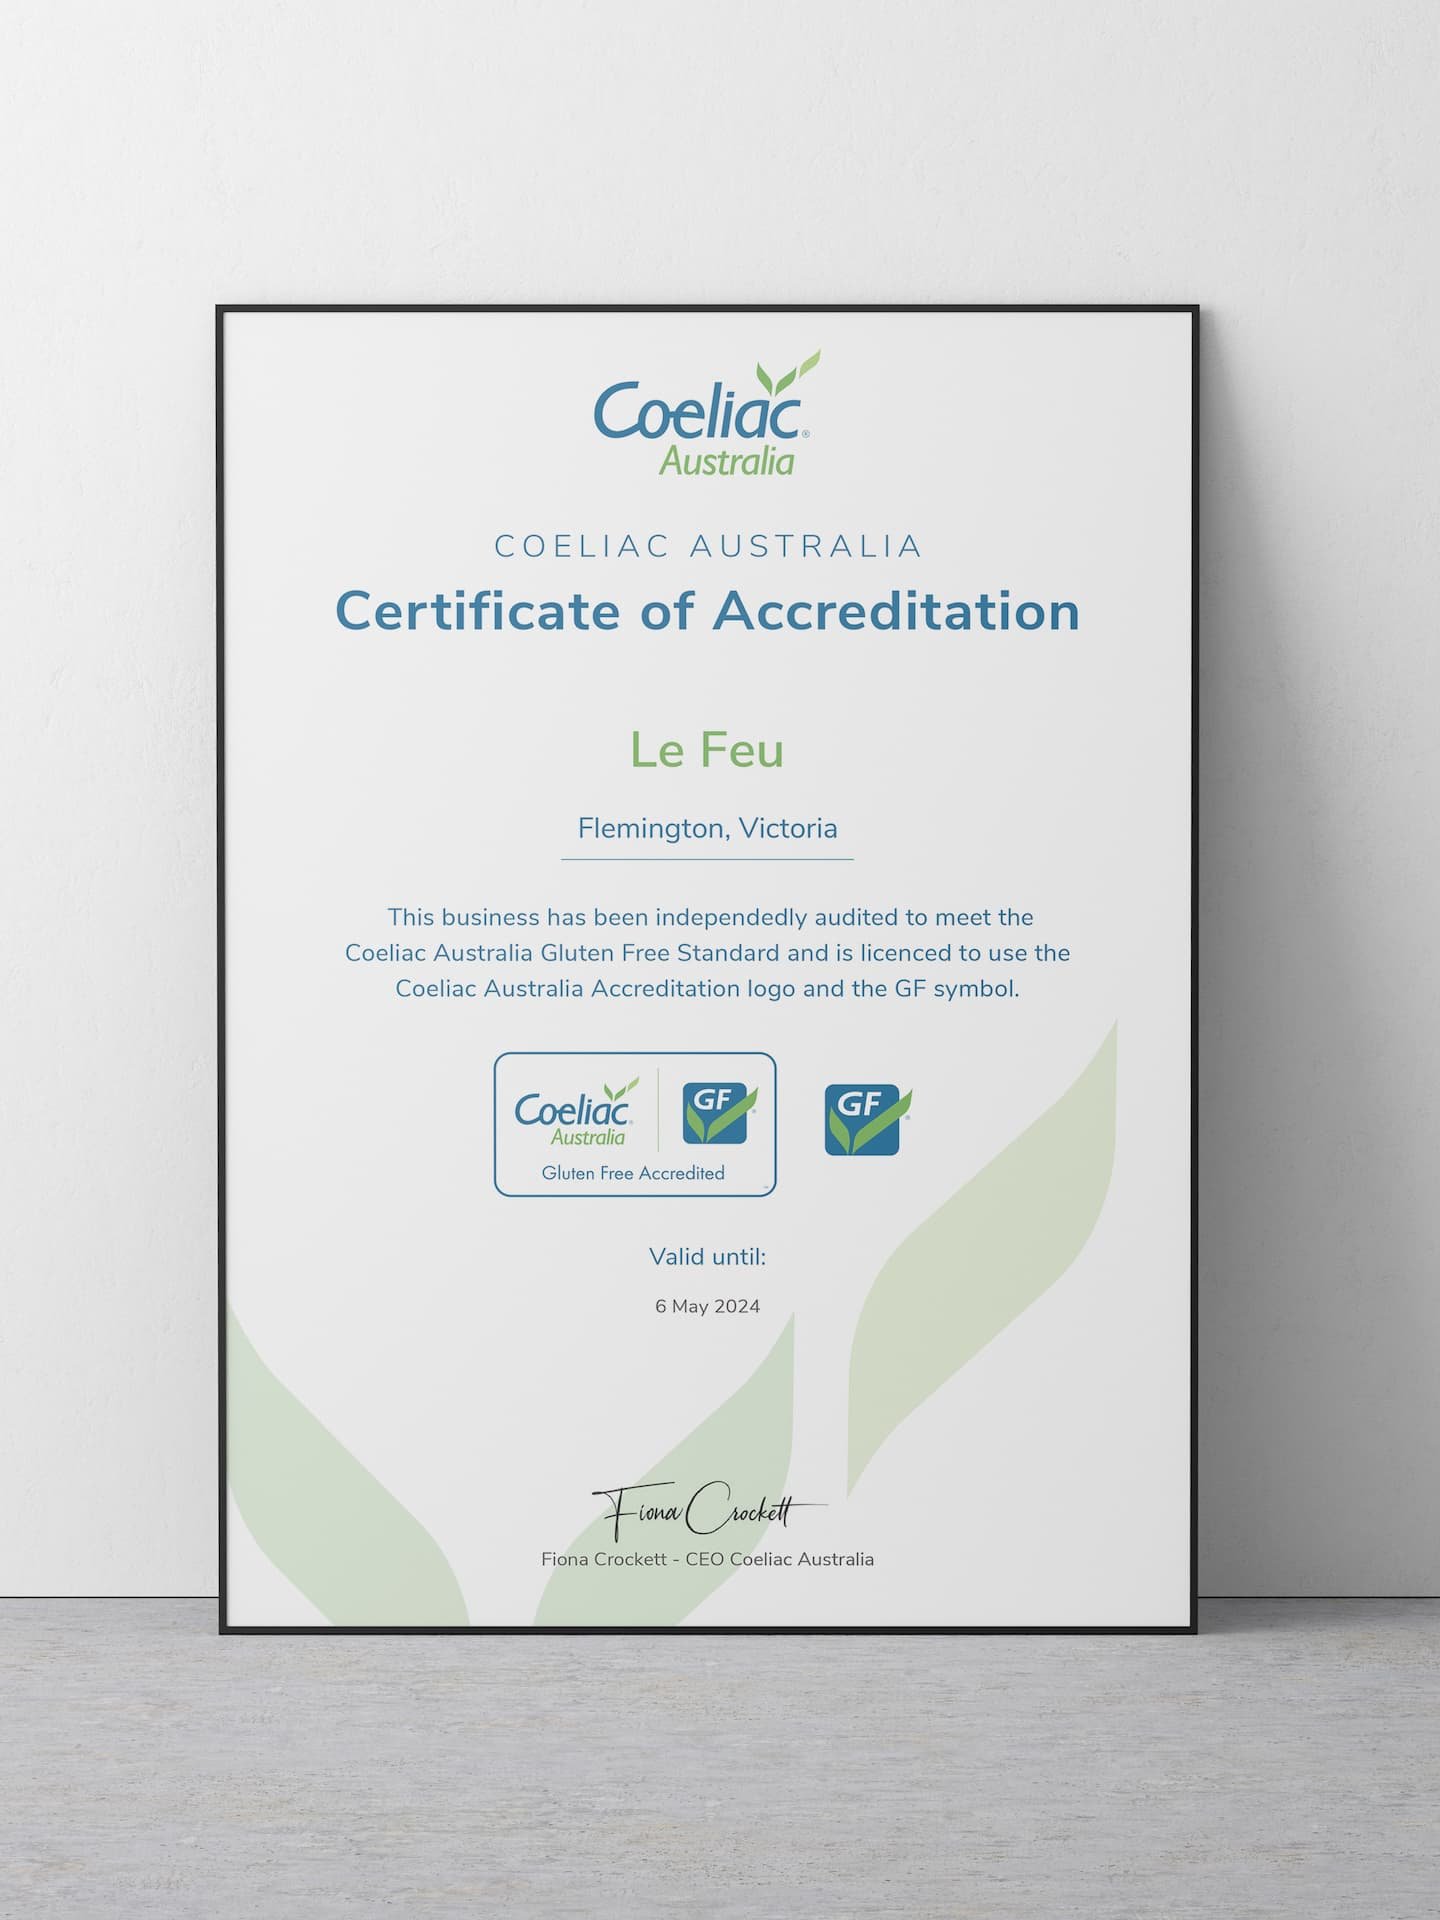 gluten free coeliac australia certificate for Le Feu Flemington.jpg